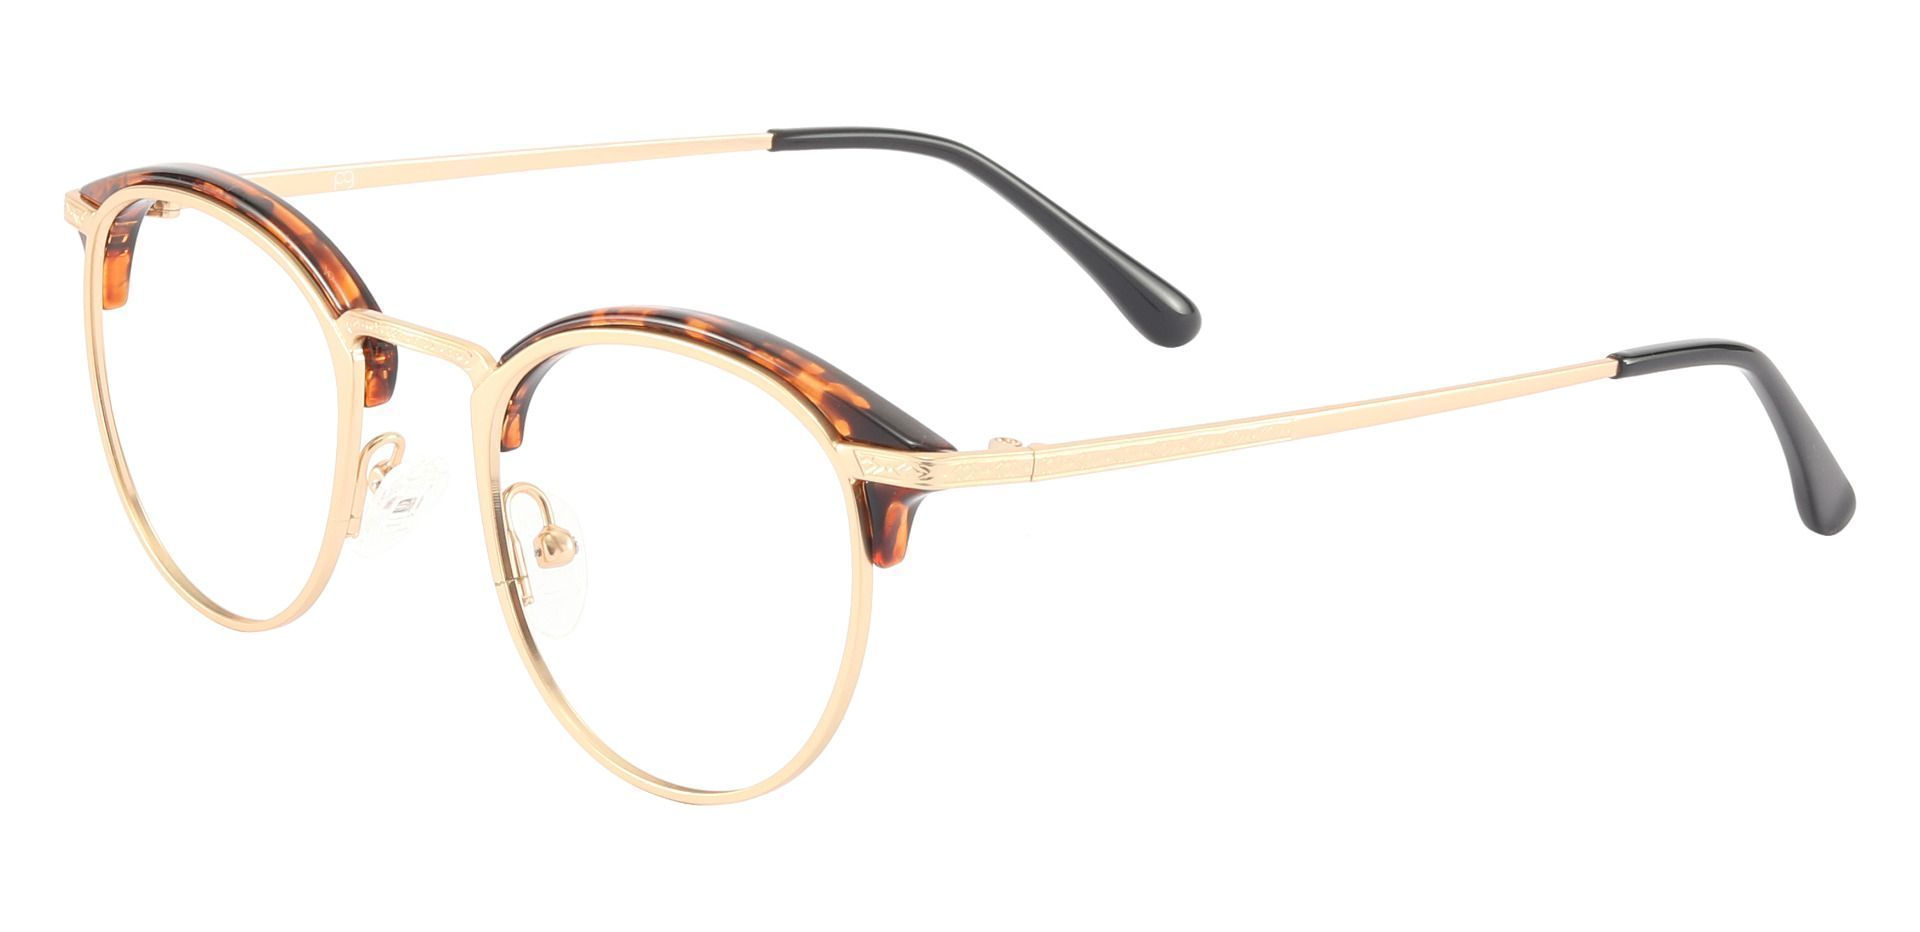 Shultz Browline Eyeglasses Frame - Gold